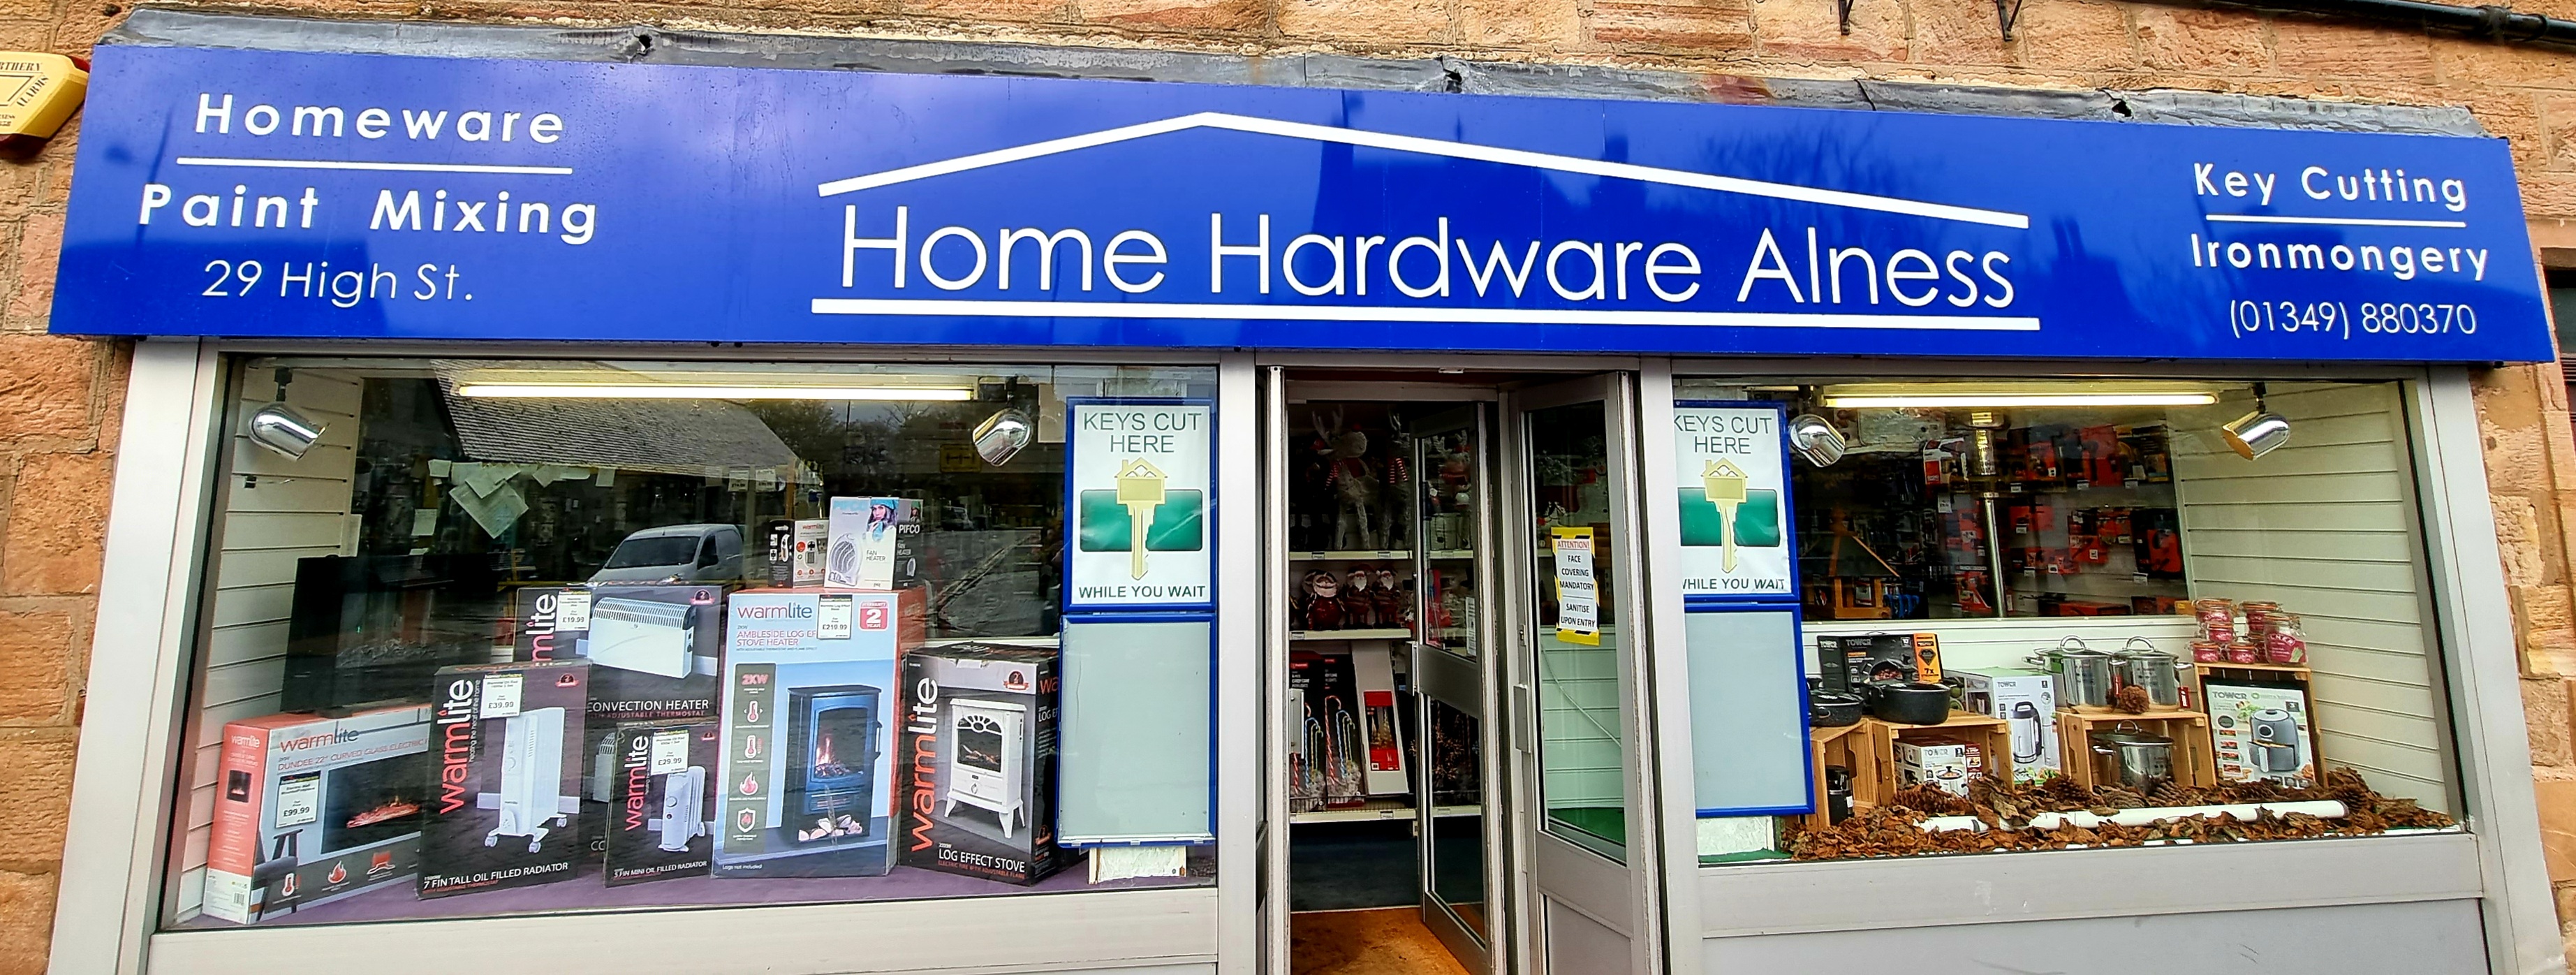 Home Hardware Alness Shop Front Image